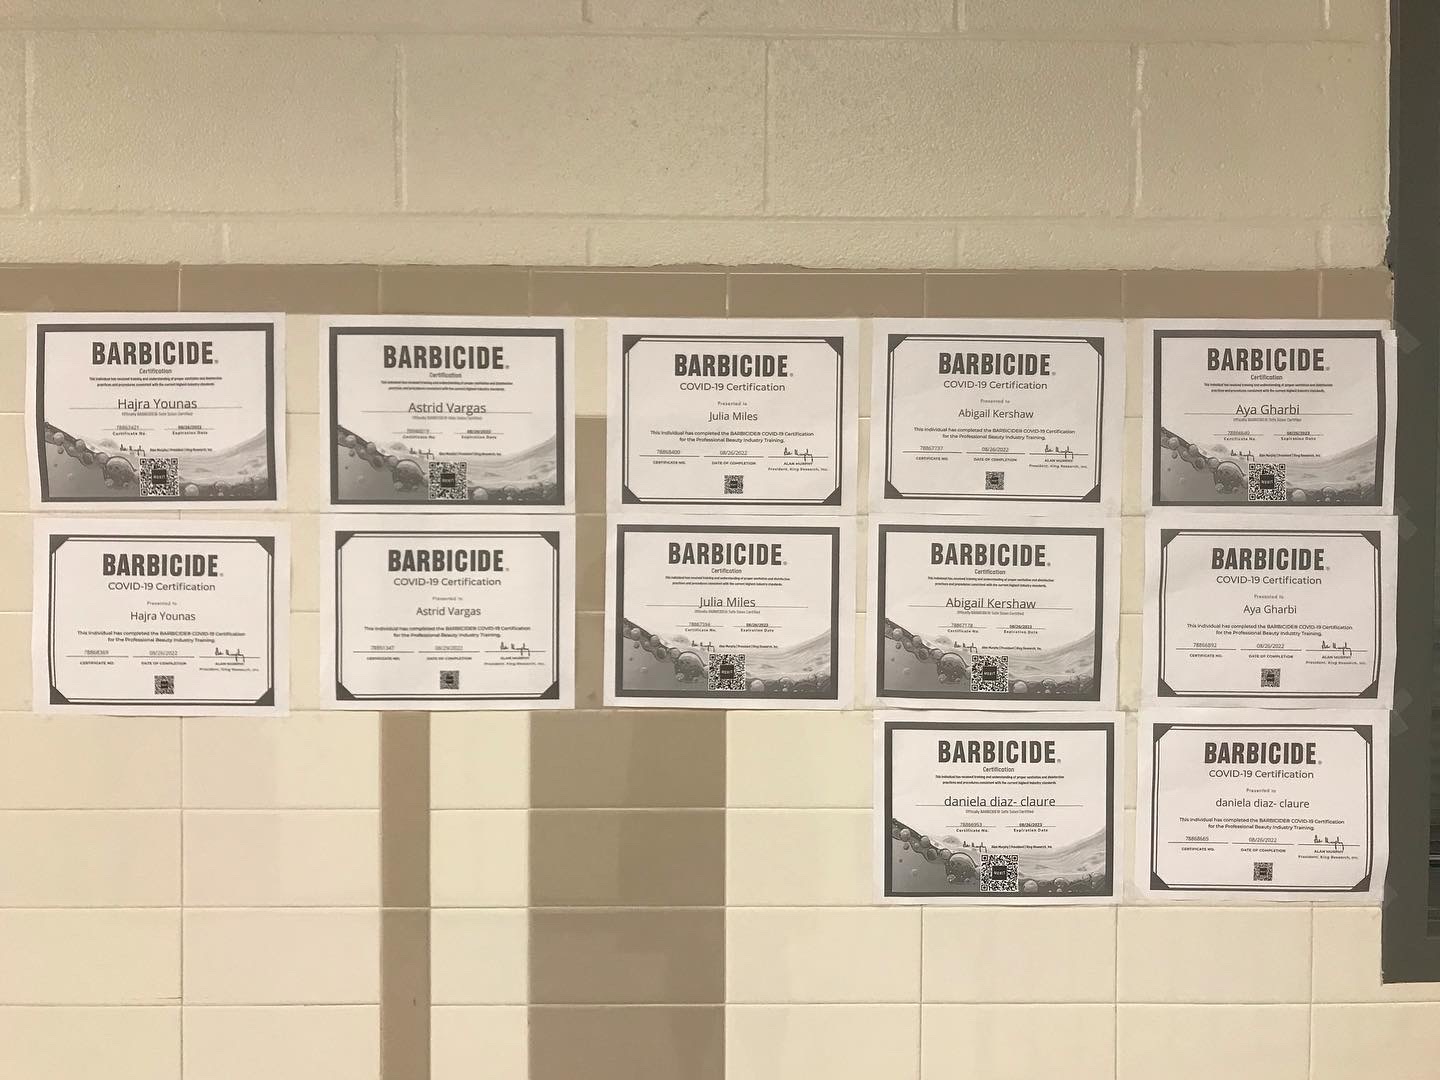 Barbacide Certifications on one side of classroom door